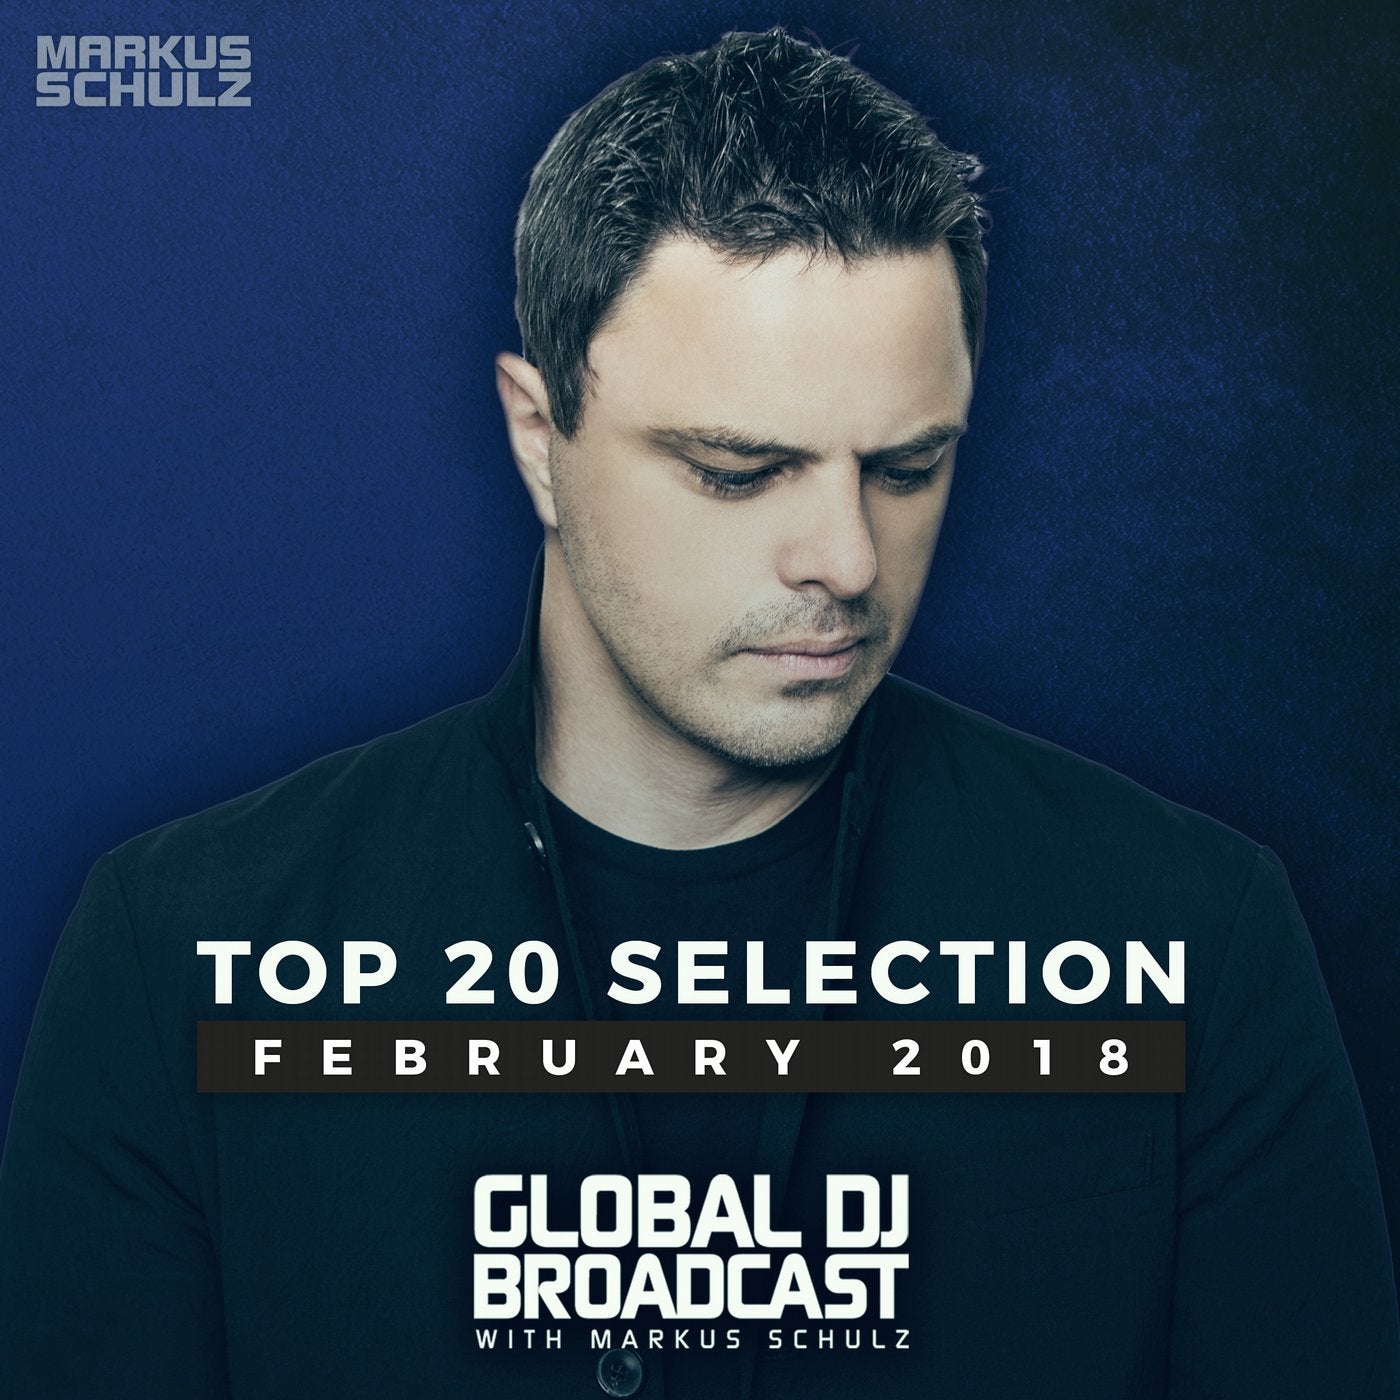 Global DJ Broadcast - Top 20 February 2018